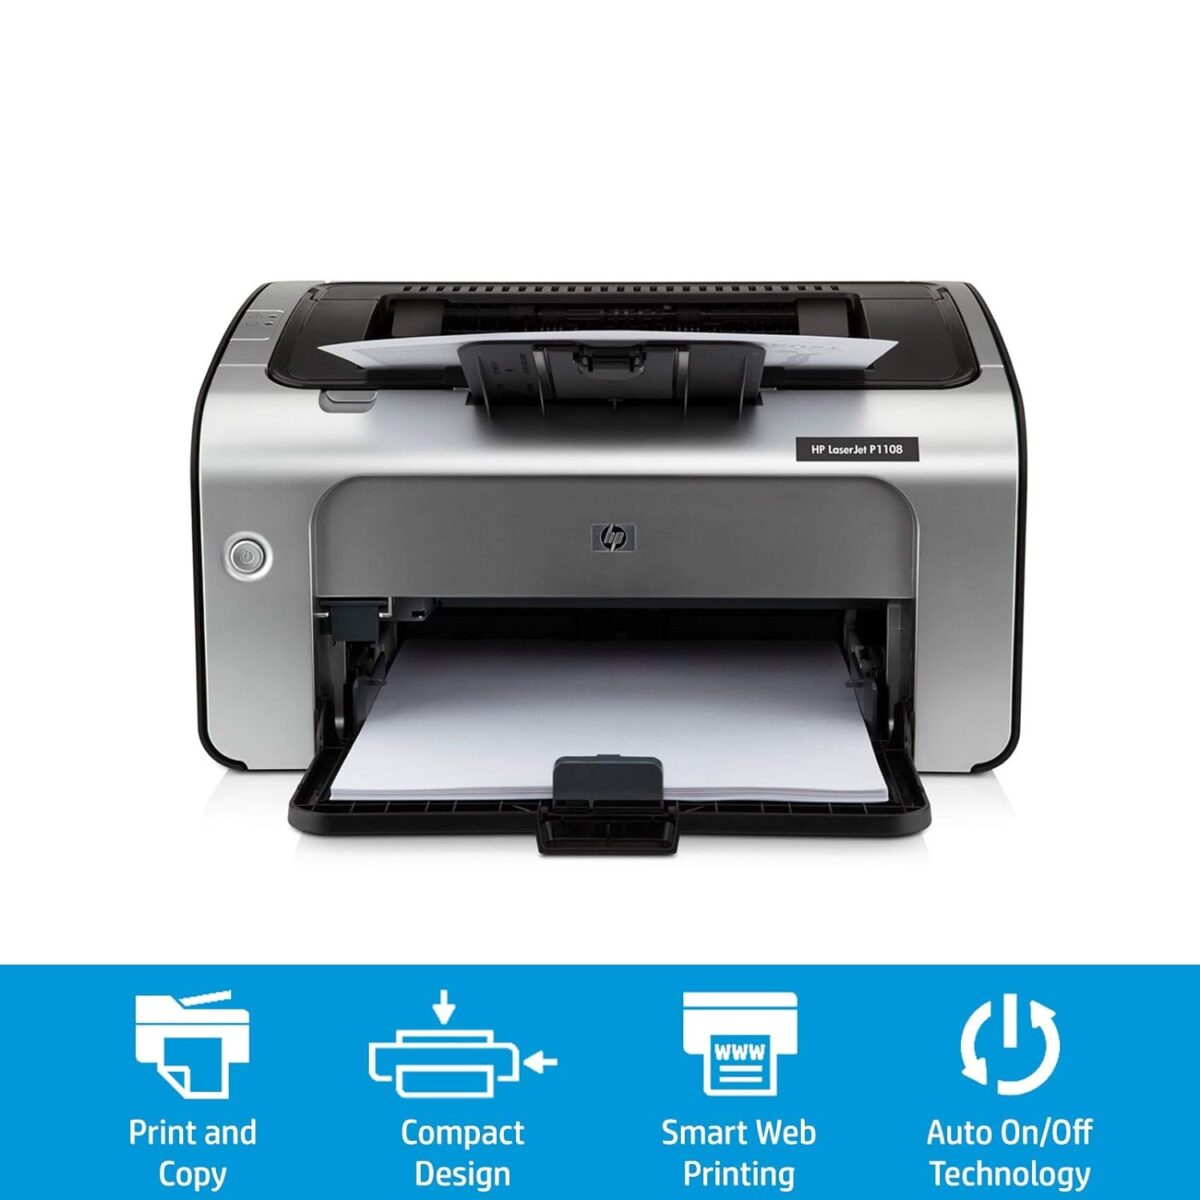 HP Laserjet P1108 Printer 7